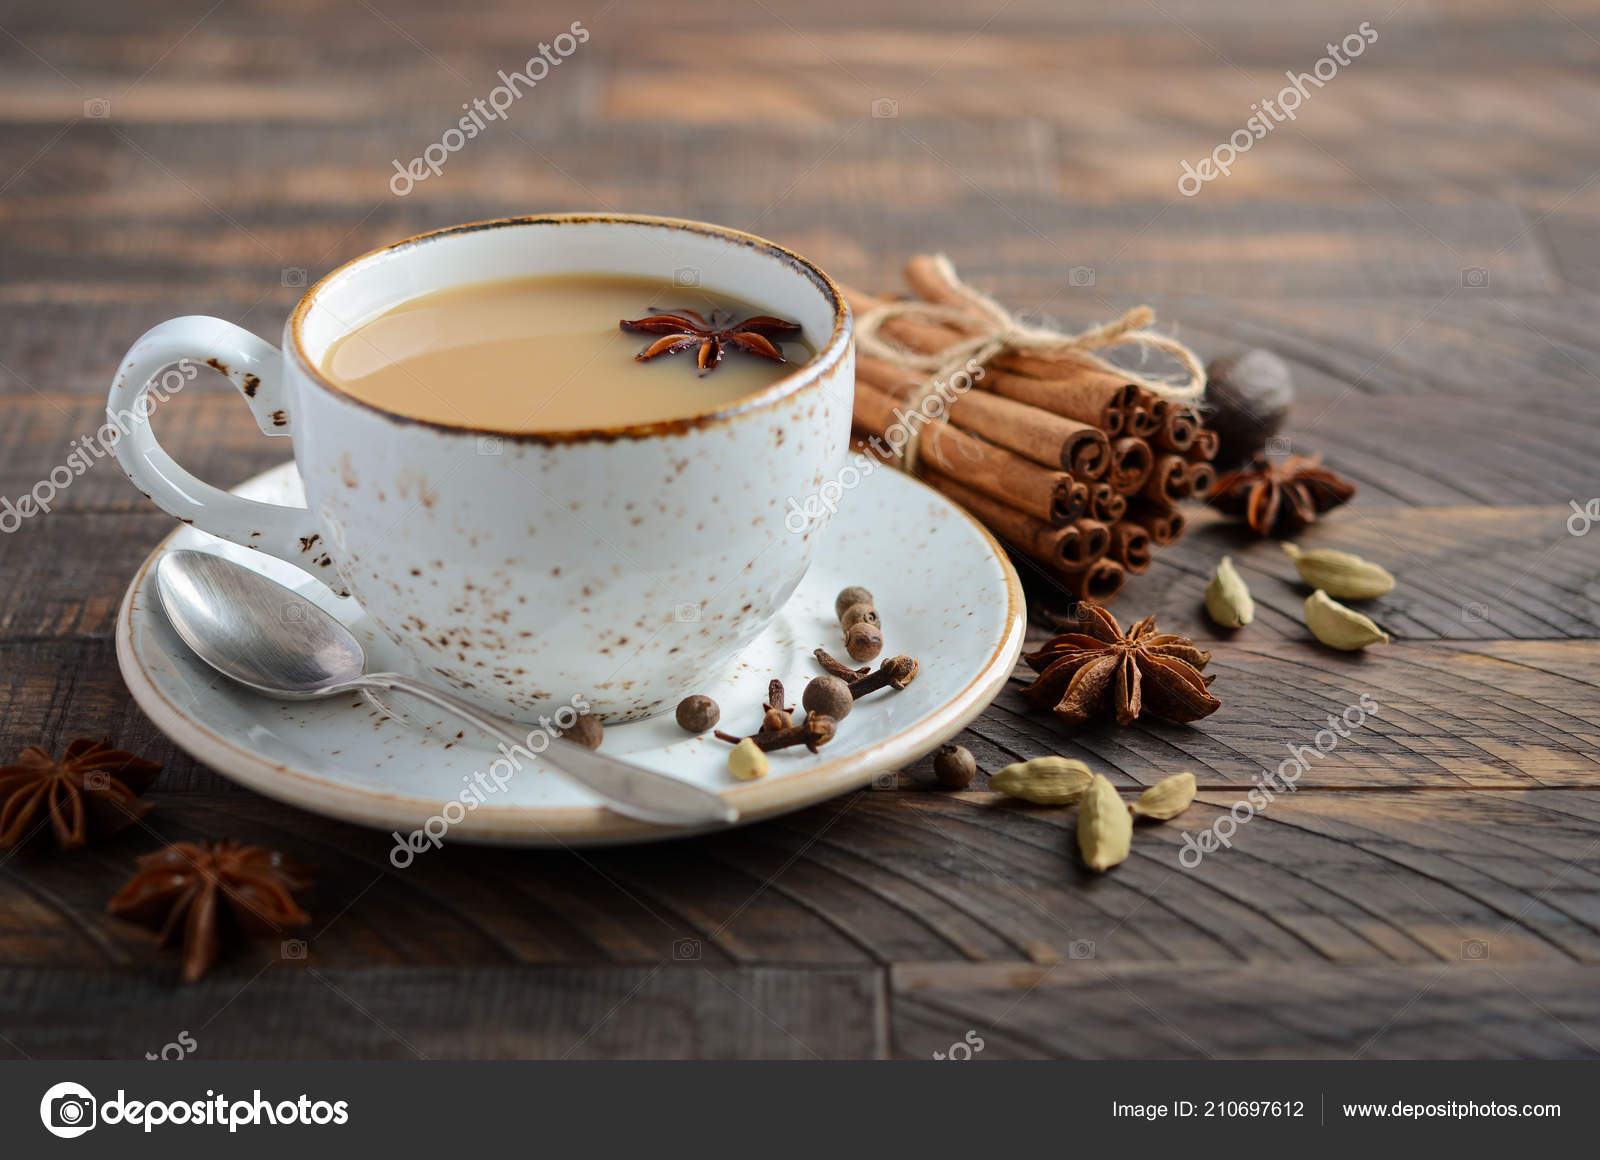 Indian Masala Chai Tea Spiced Tea Milk Rustic Wooden Table Stock Photo C Julijadm 210697612,Cinnamon Streusel Topping